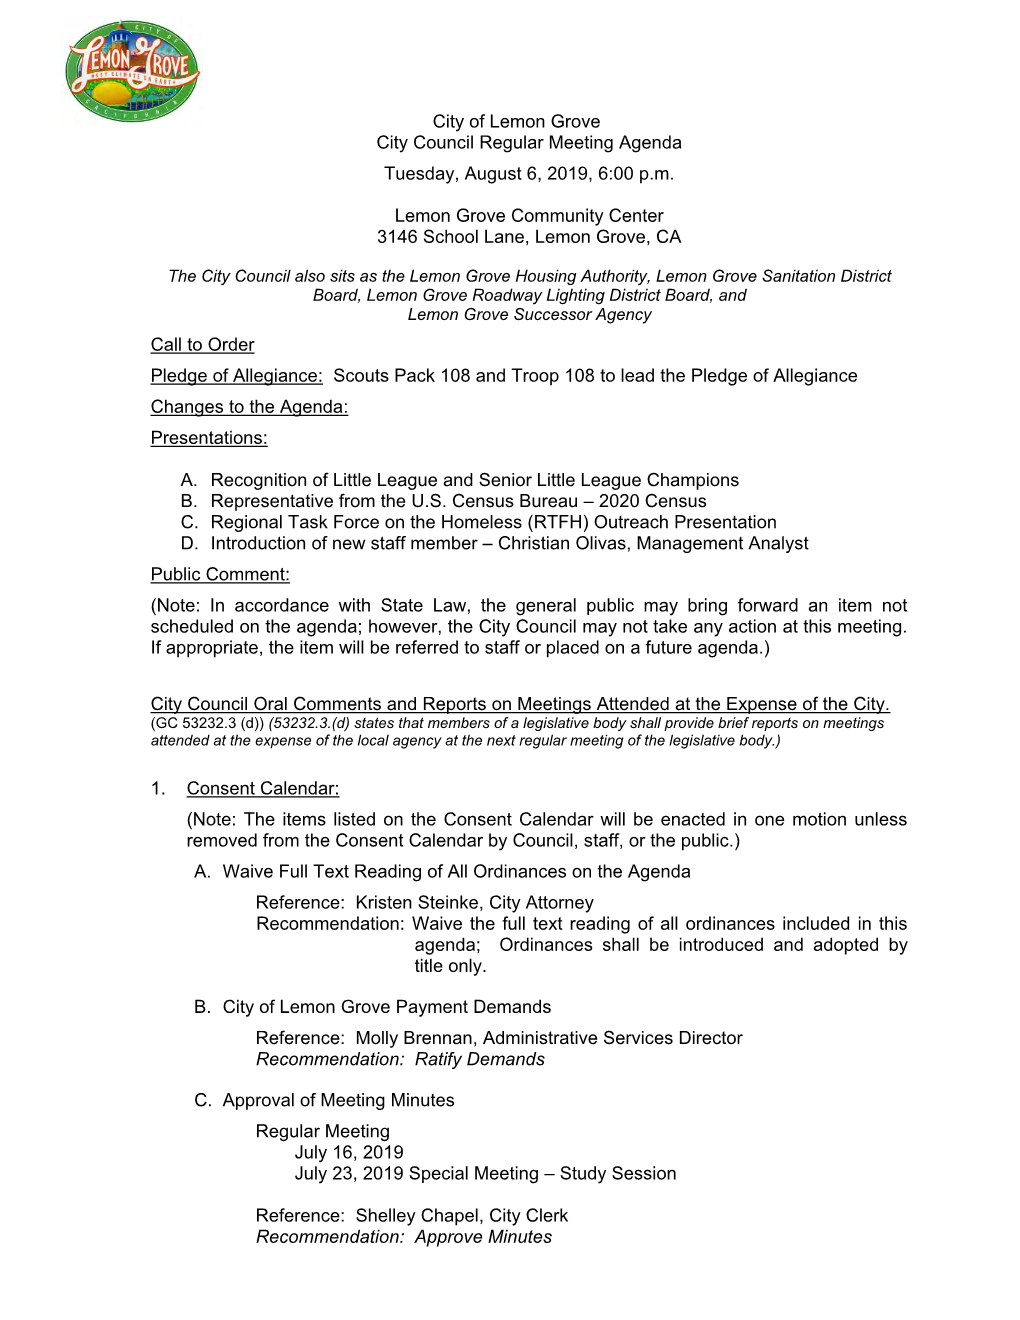 City of Lemon Grove City Council Regular Meeting Agenda Tuesday, August 6, 2019, 6:00 P.M